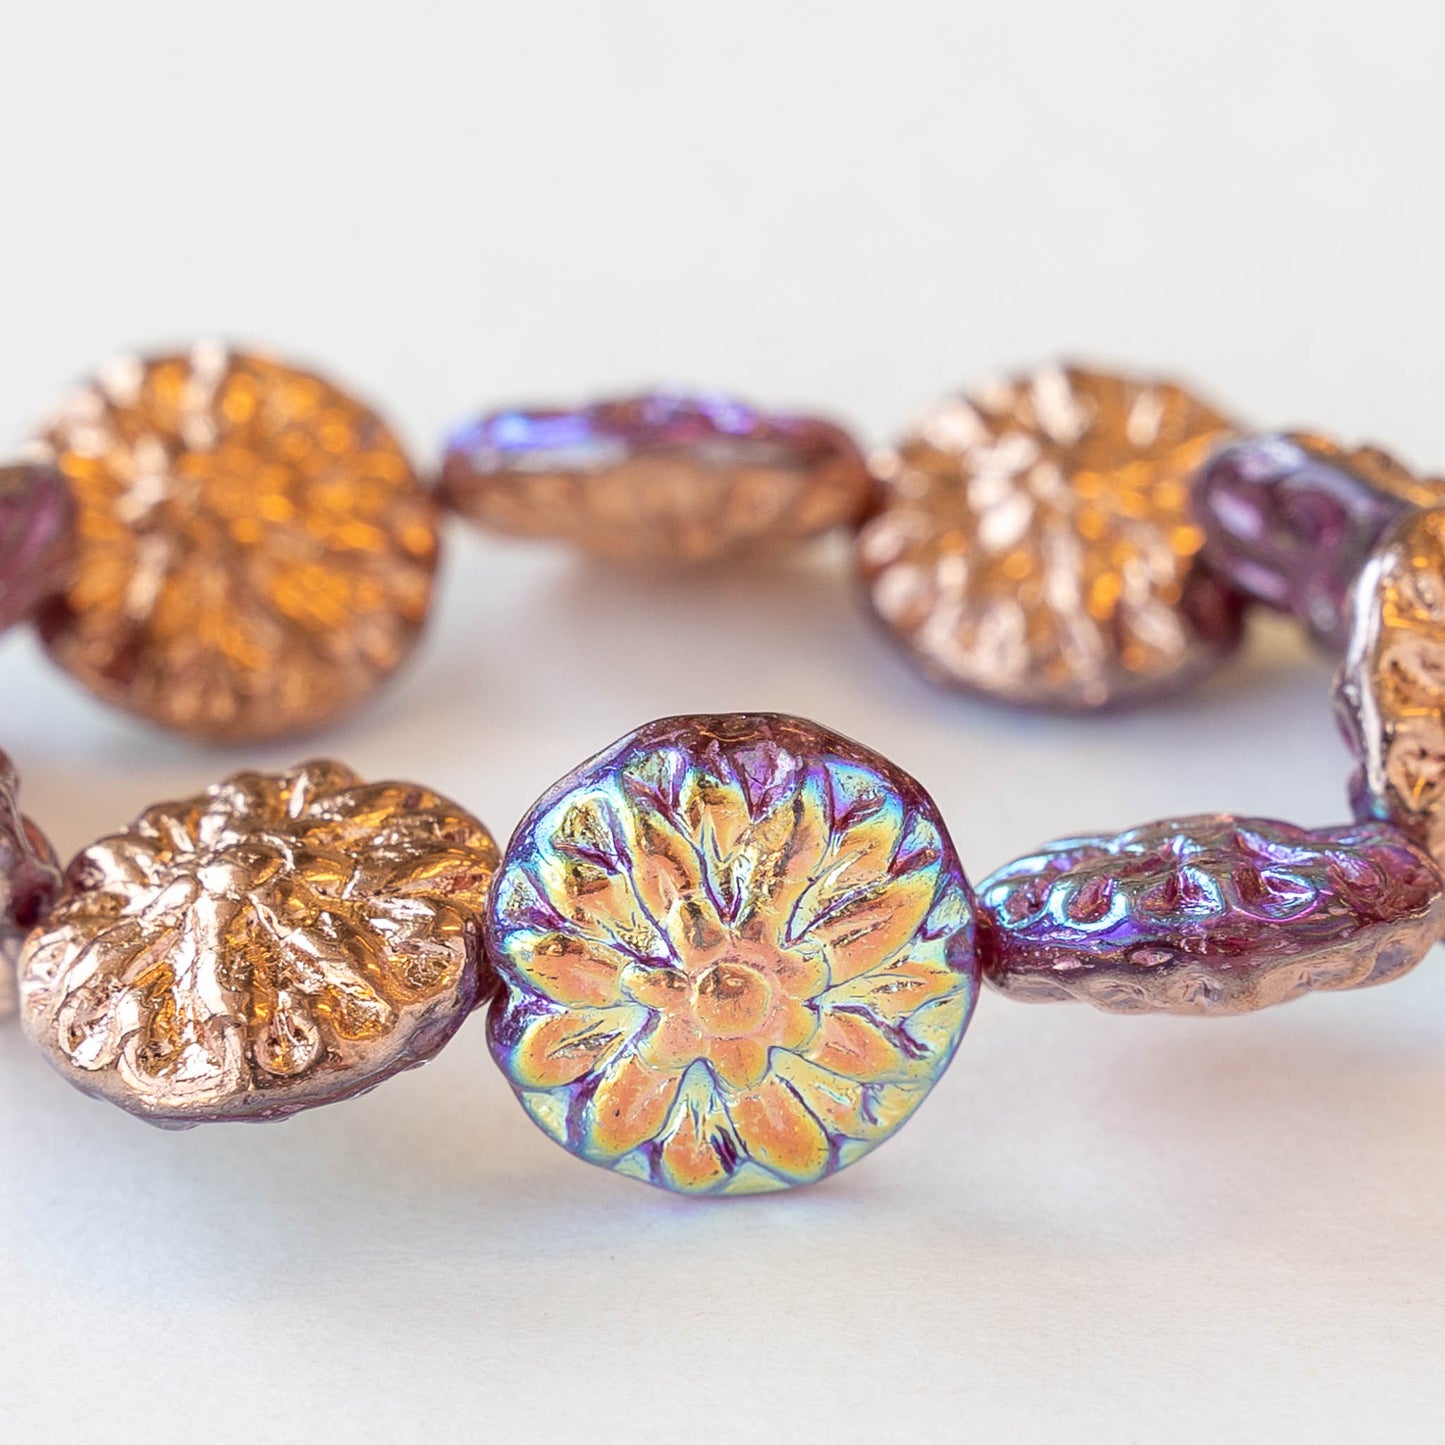 14mm Dahlia Flower Beads - Copper and Metallic Pink Iridescent Finish - 10 Beads